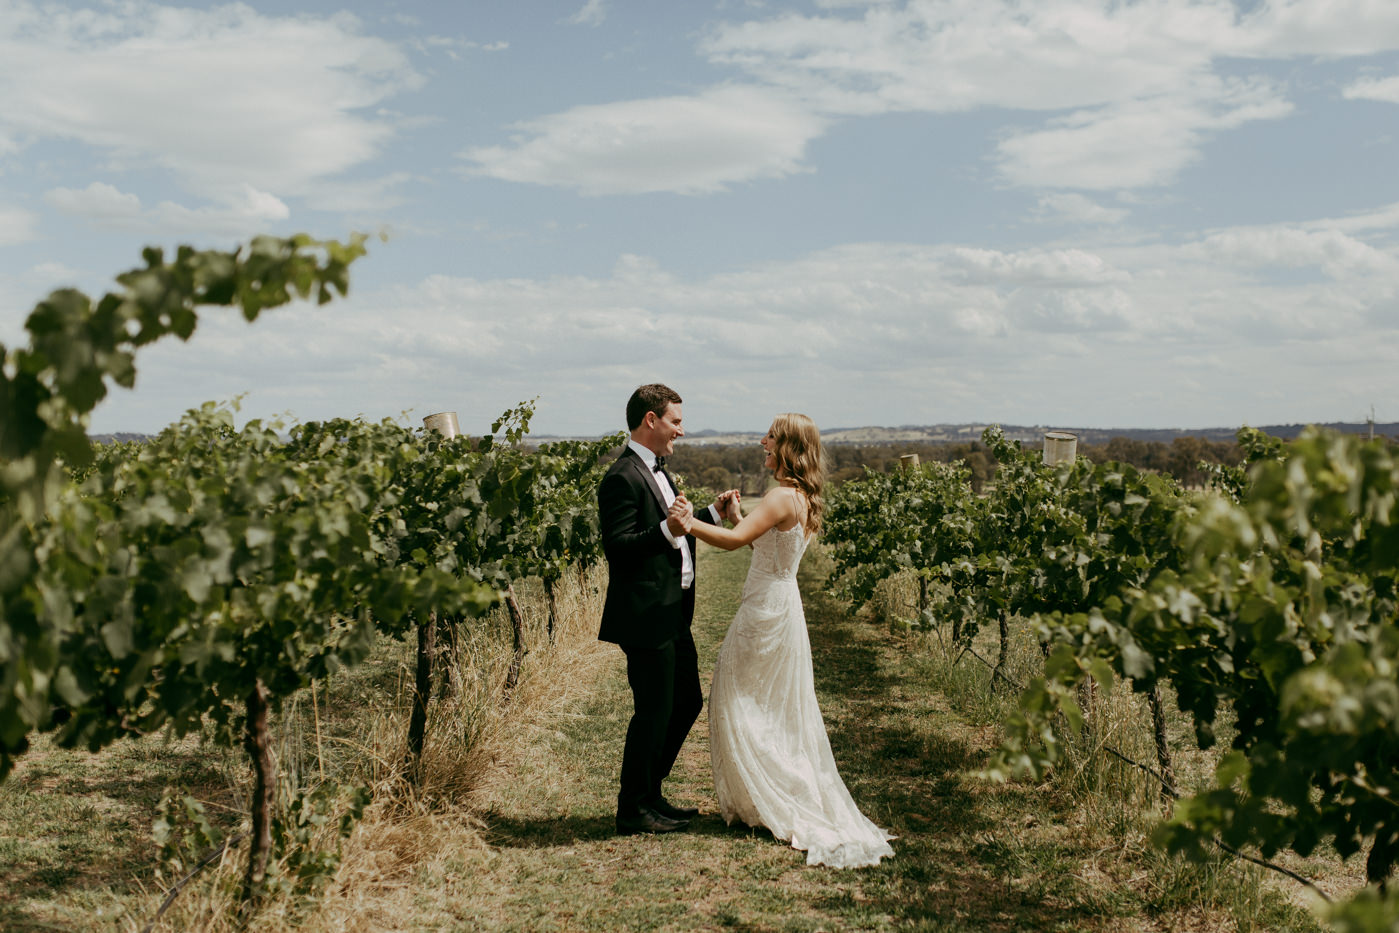 Anthony & Eliet - Wagga Wagga Wedding - Country NSW - Samantha Heather Photography-70.jpg